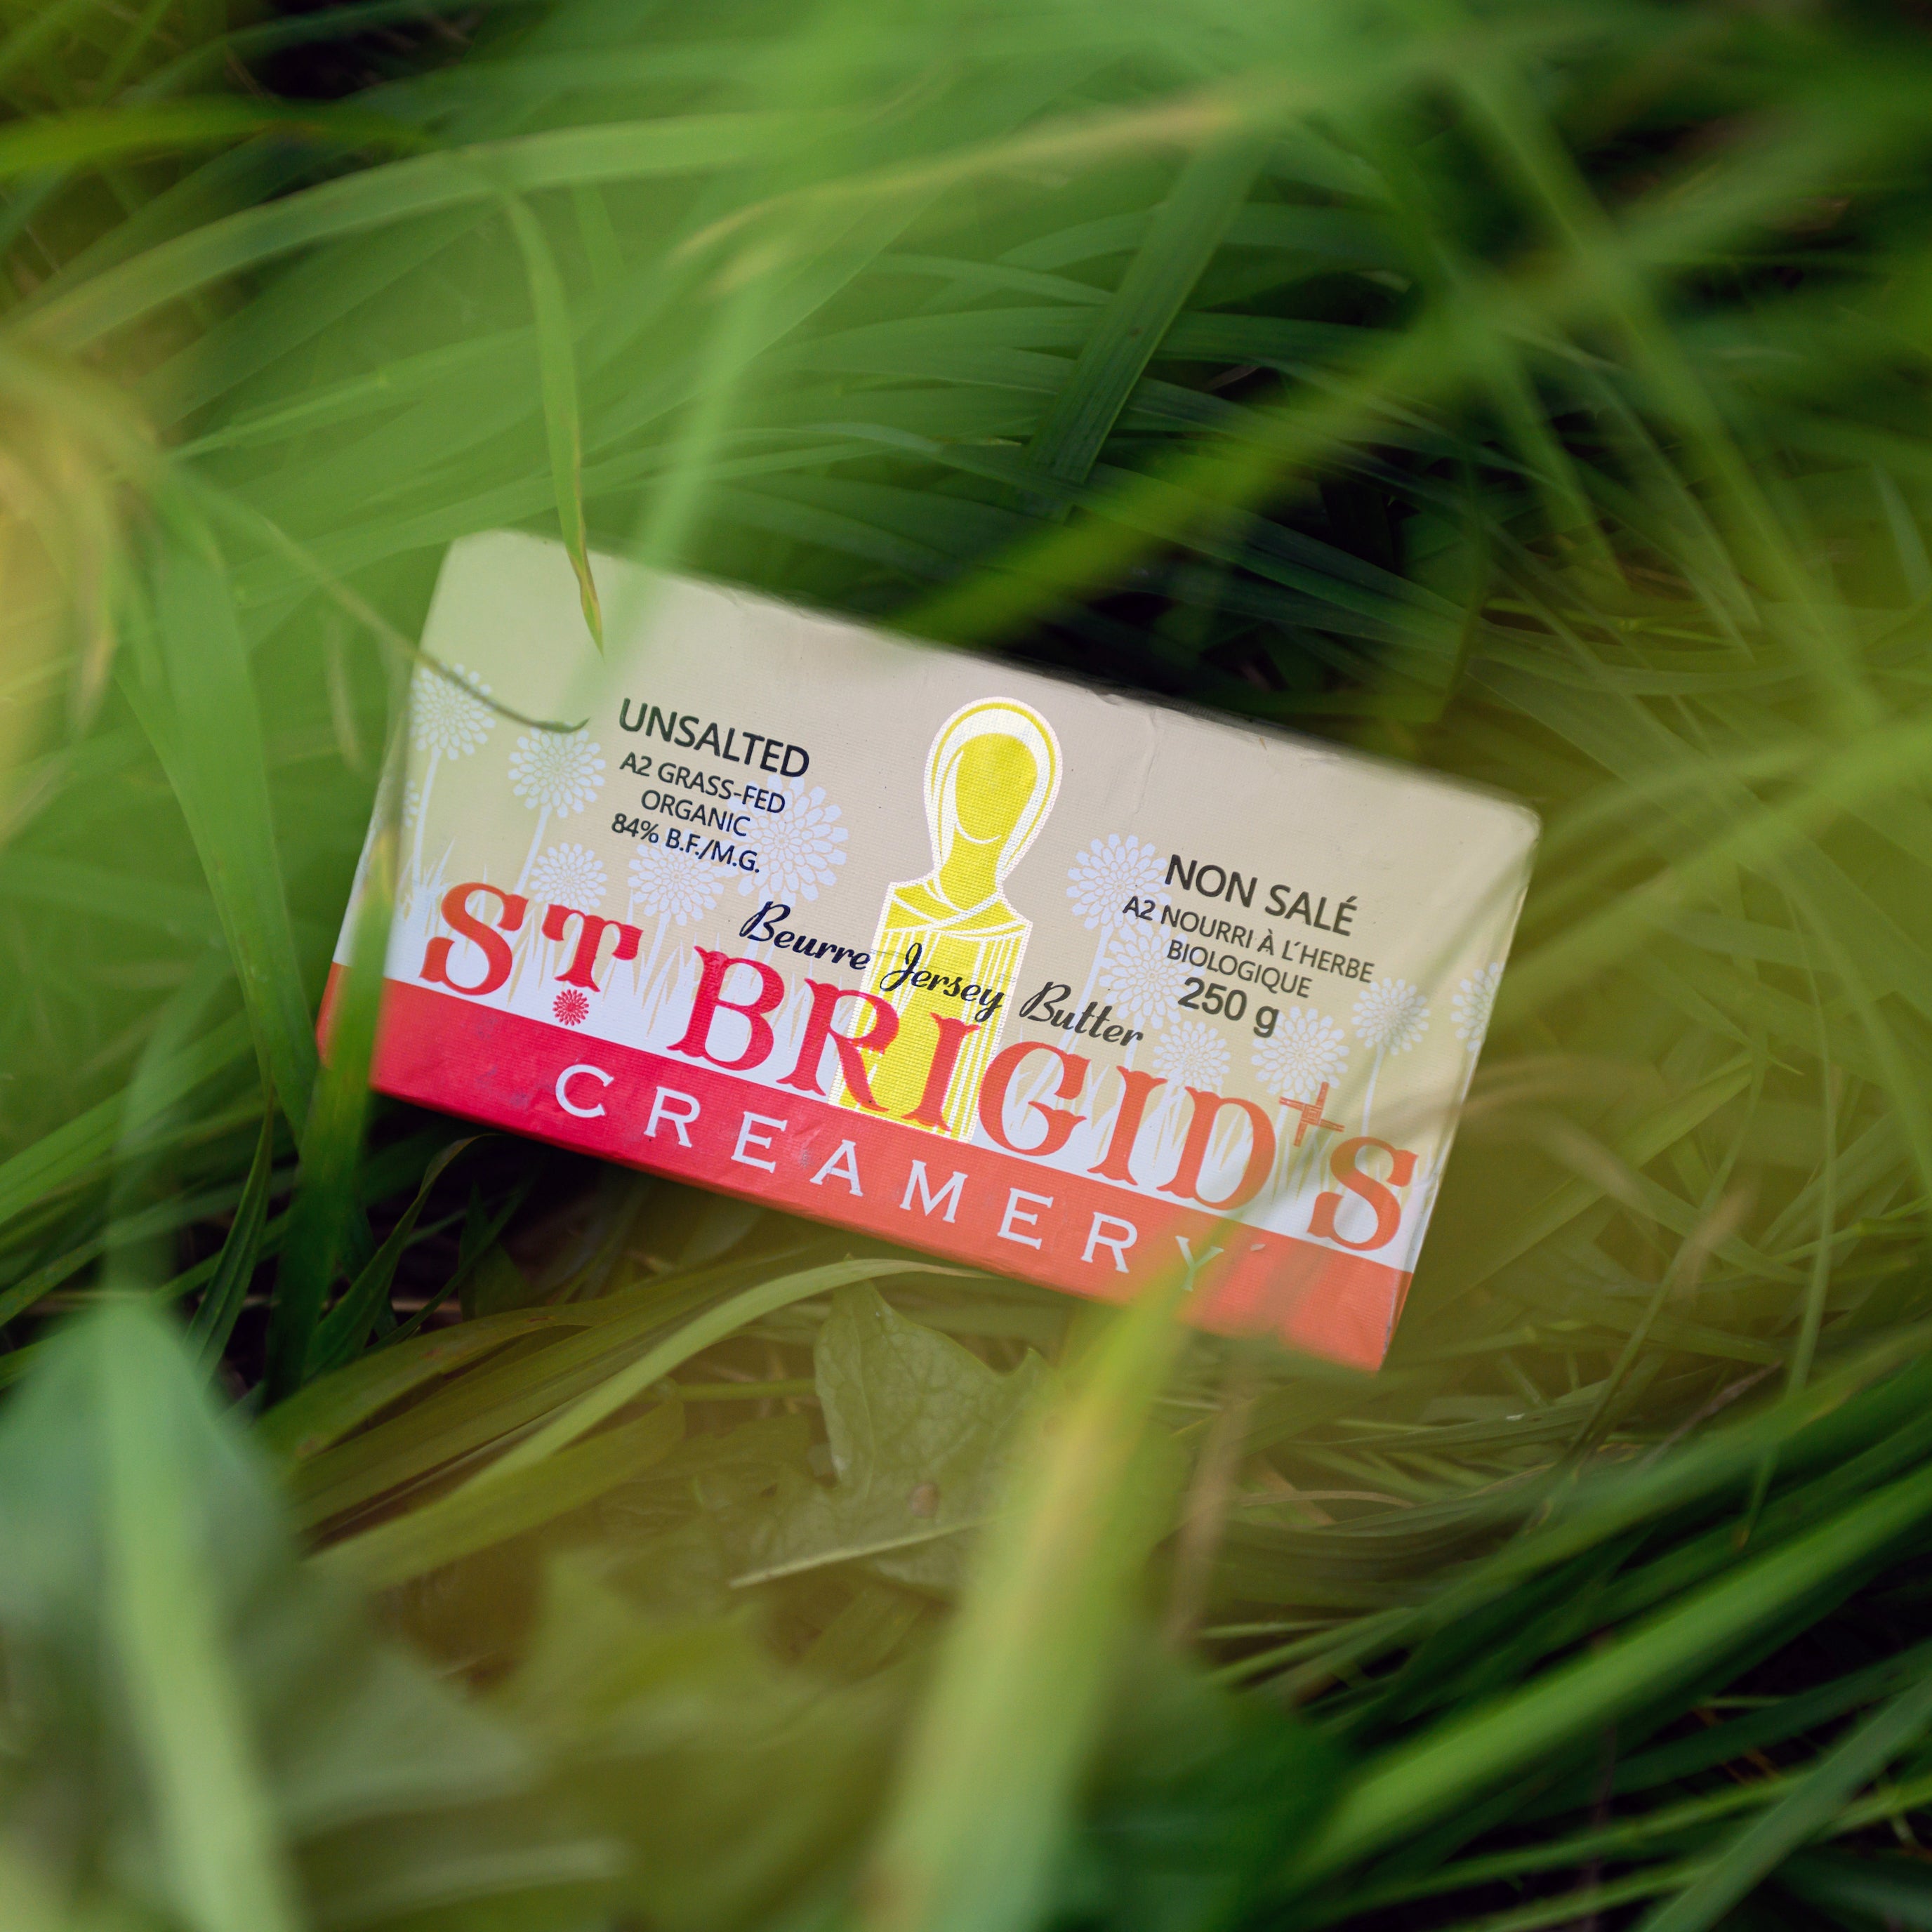 ST. BRIGID'S CREAMERY Organic Churn 84 Unsalted Butter 84% Fat, 250g